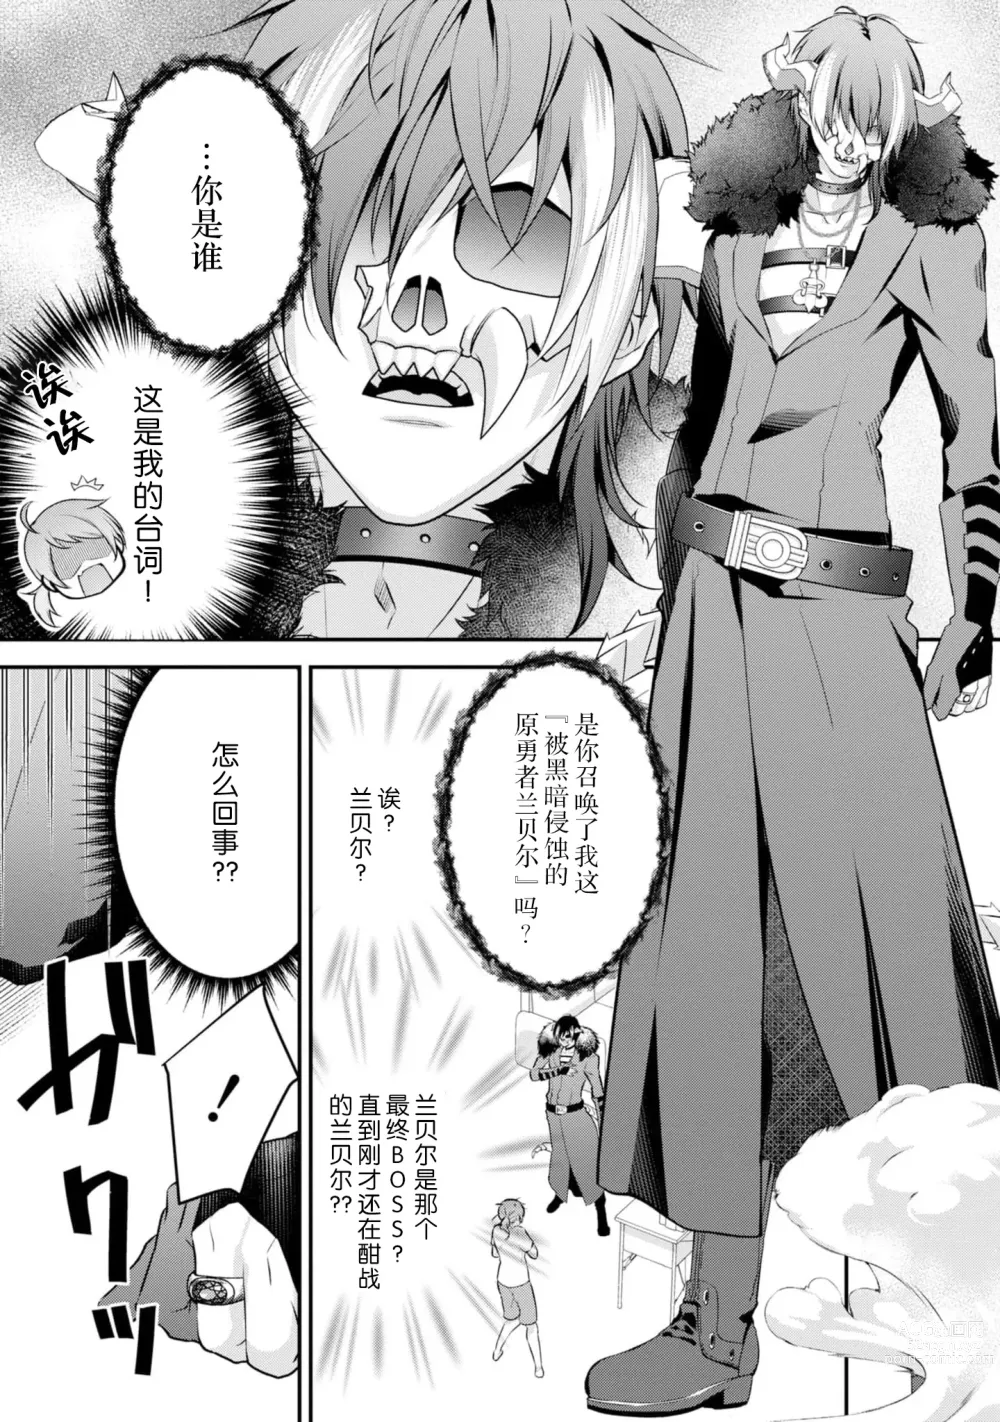 Page 15 of manga 最终BOSS转生而来，因此拿下了他的童贞 1-9 end